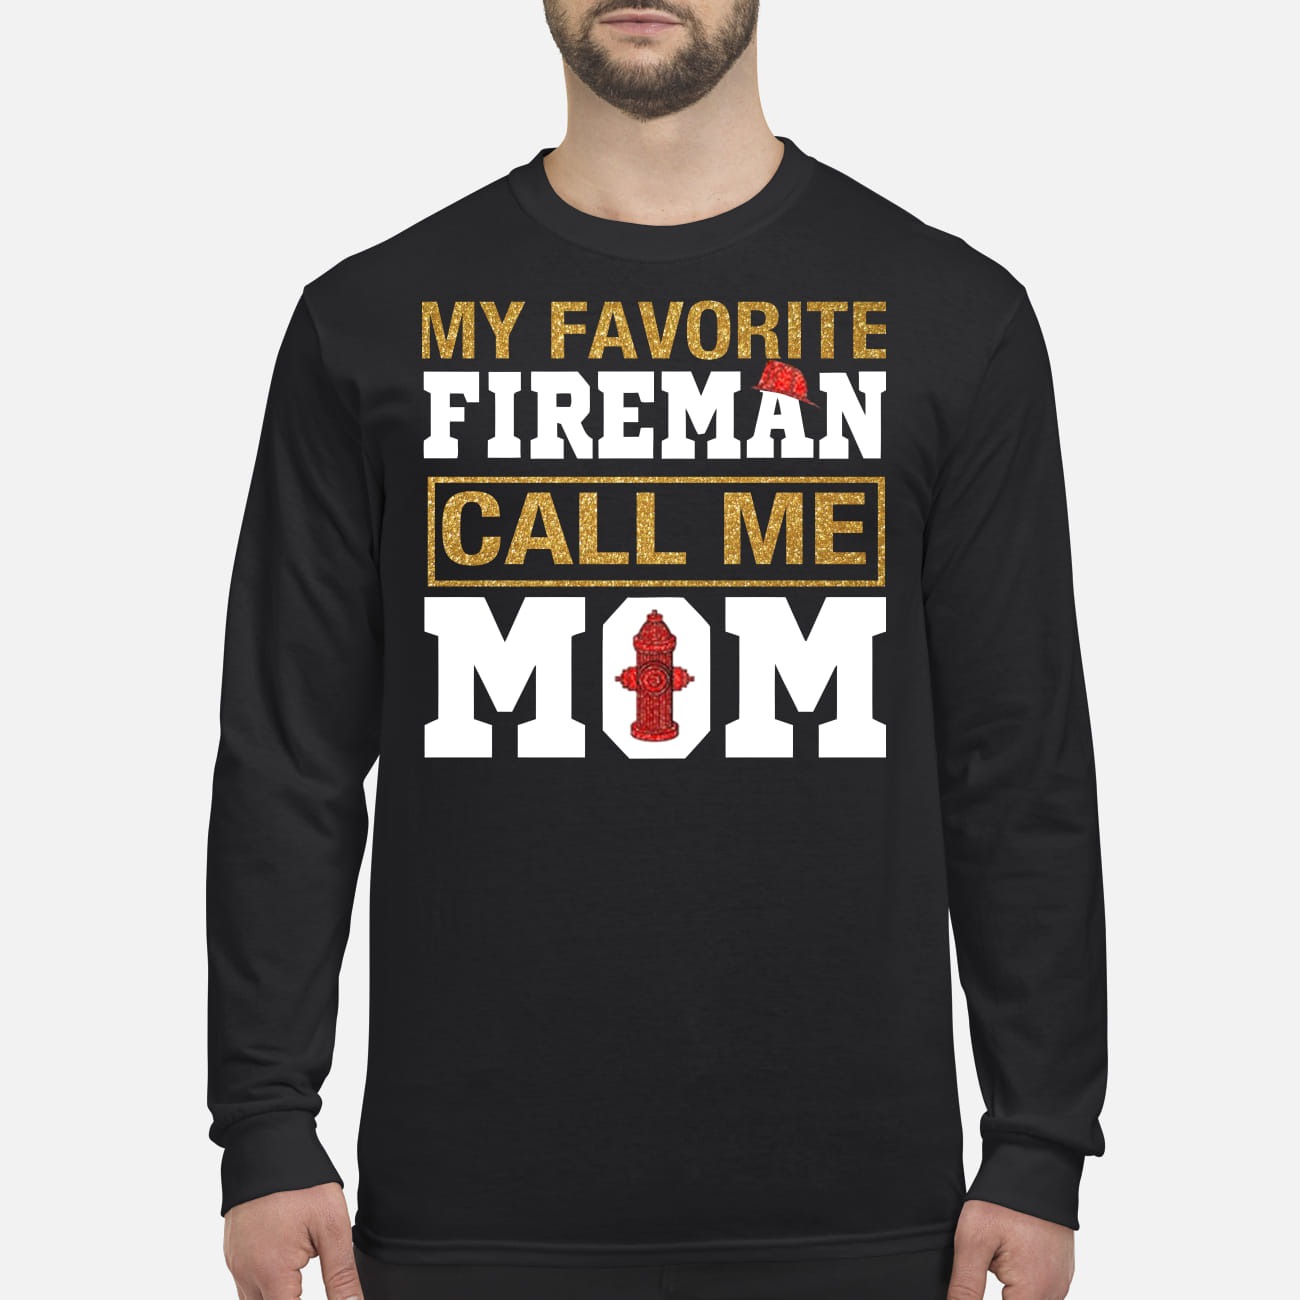 My favorite fireman call me mom men's long sleeved shirt